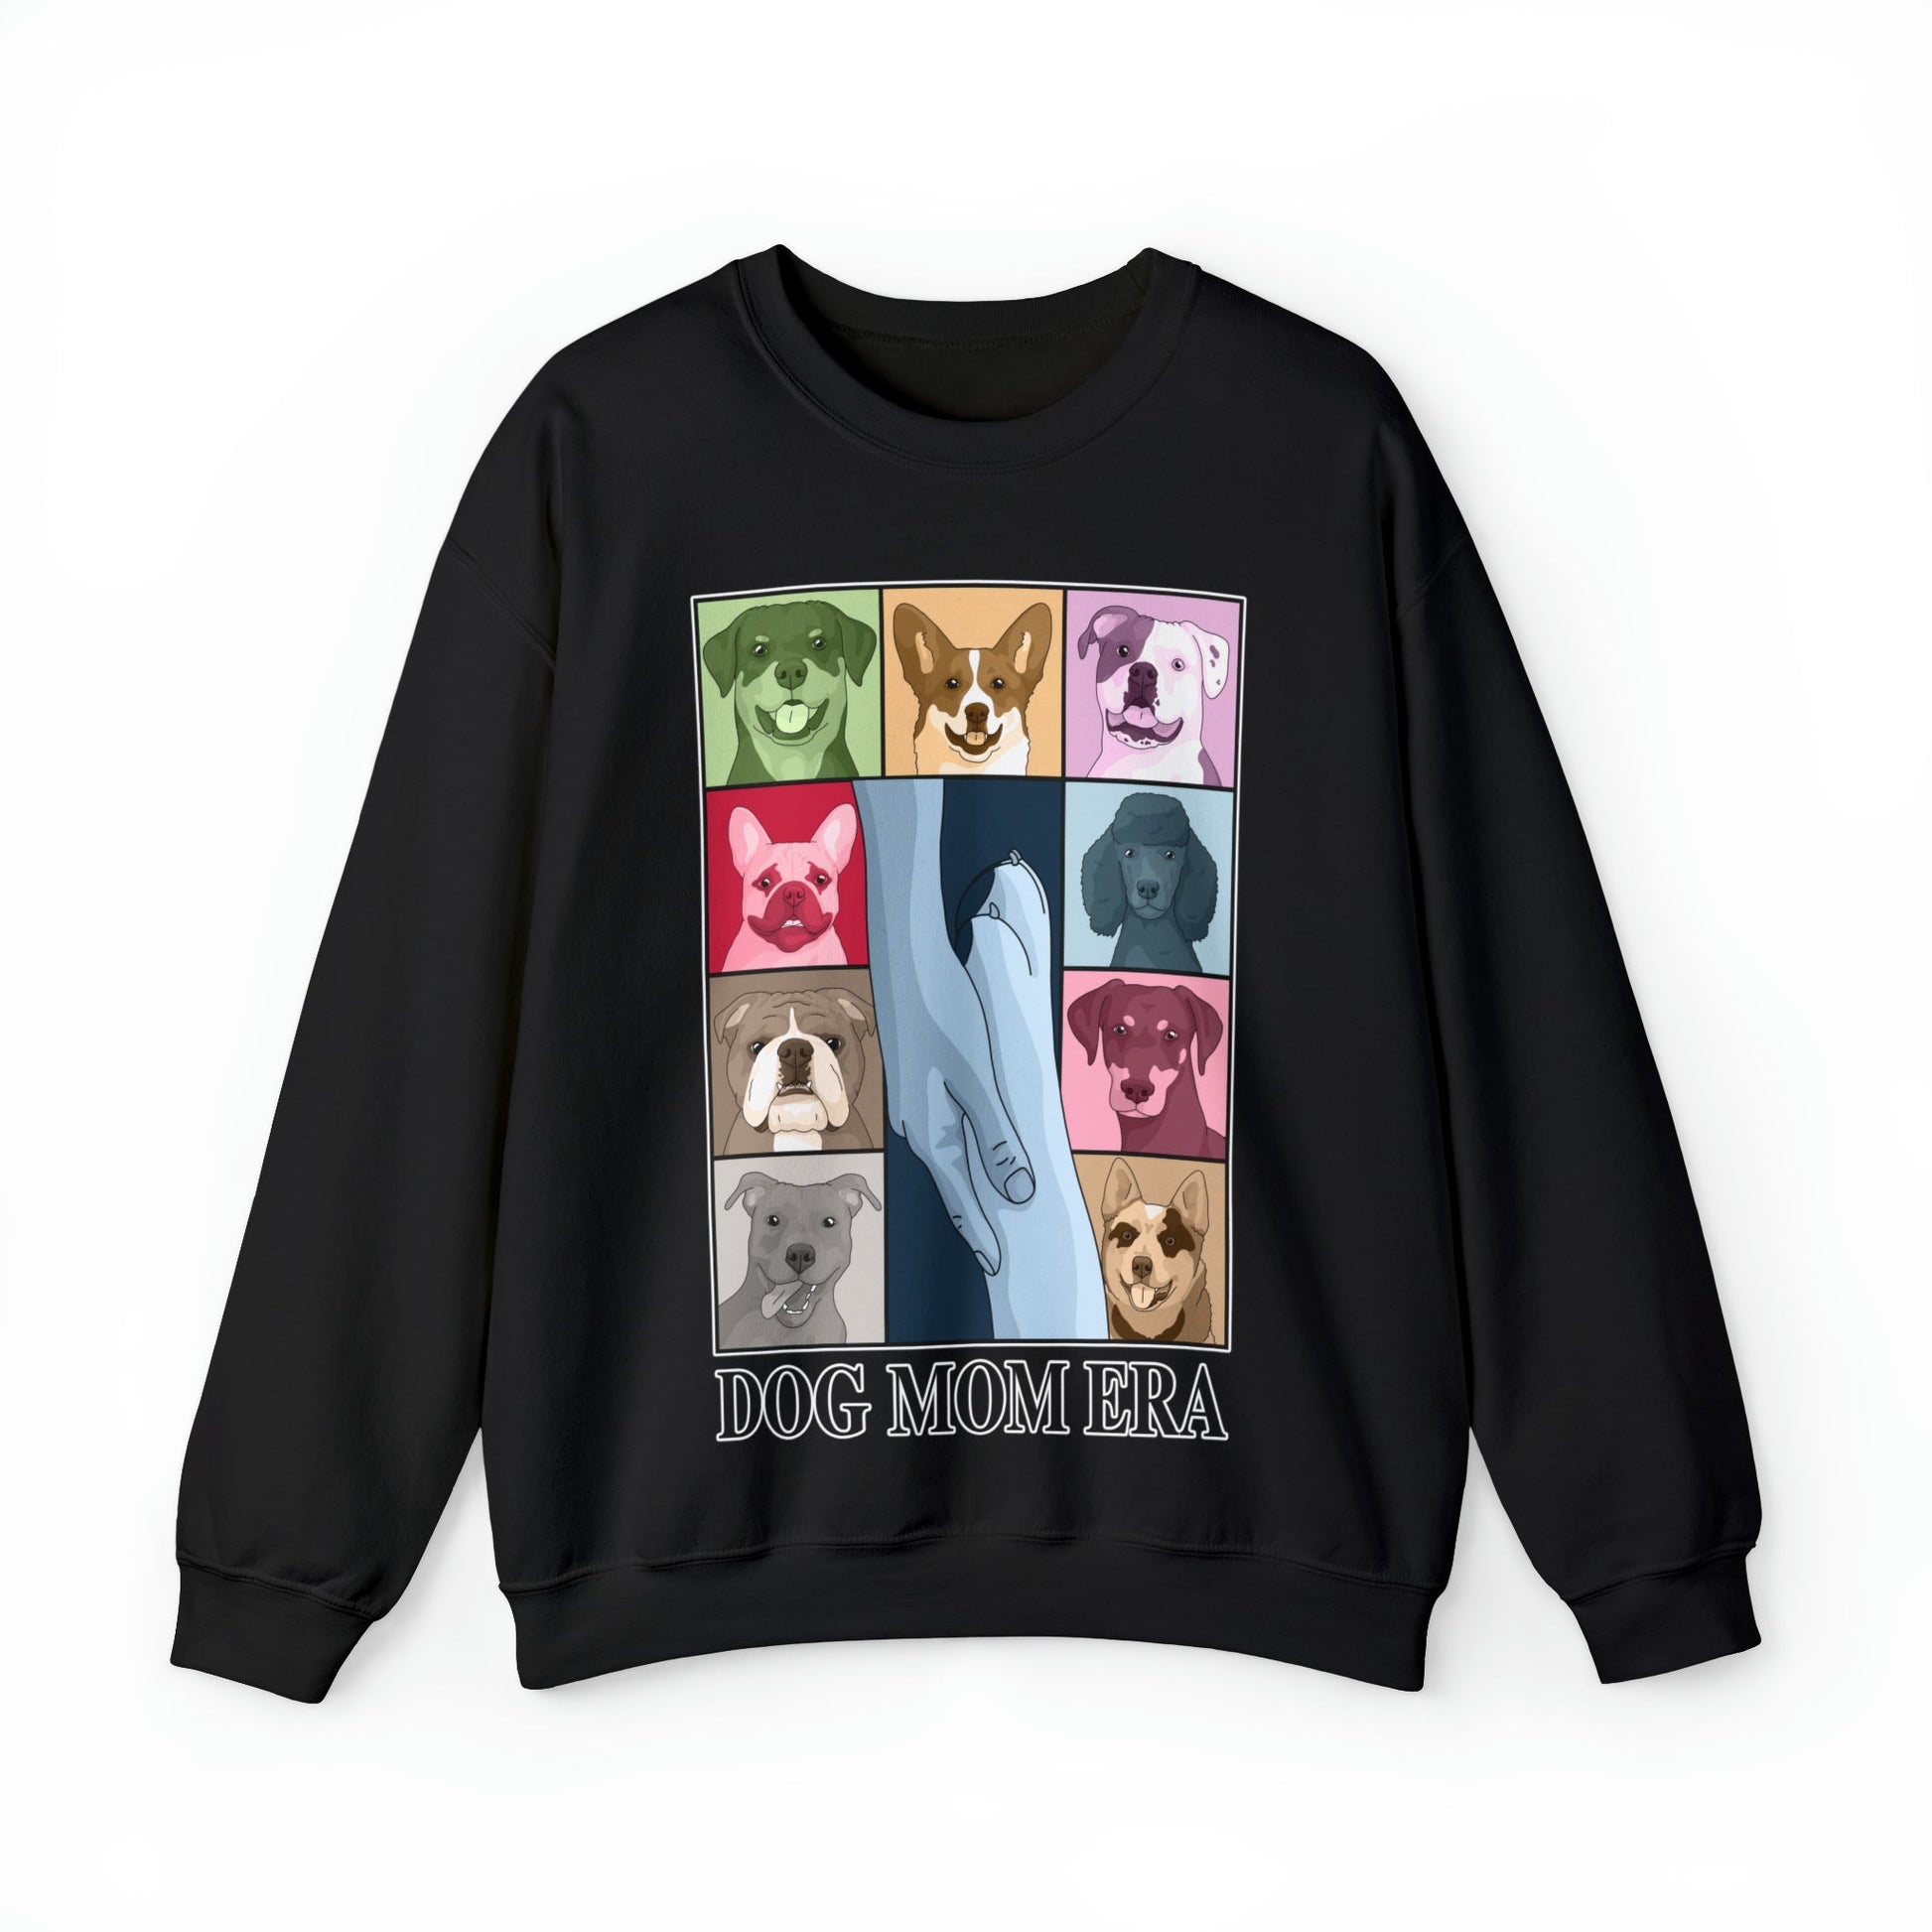 Dog Mom Era | Crewneck Sweatshirt - Detezi Designs-11703303852455839603